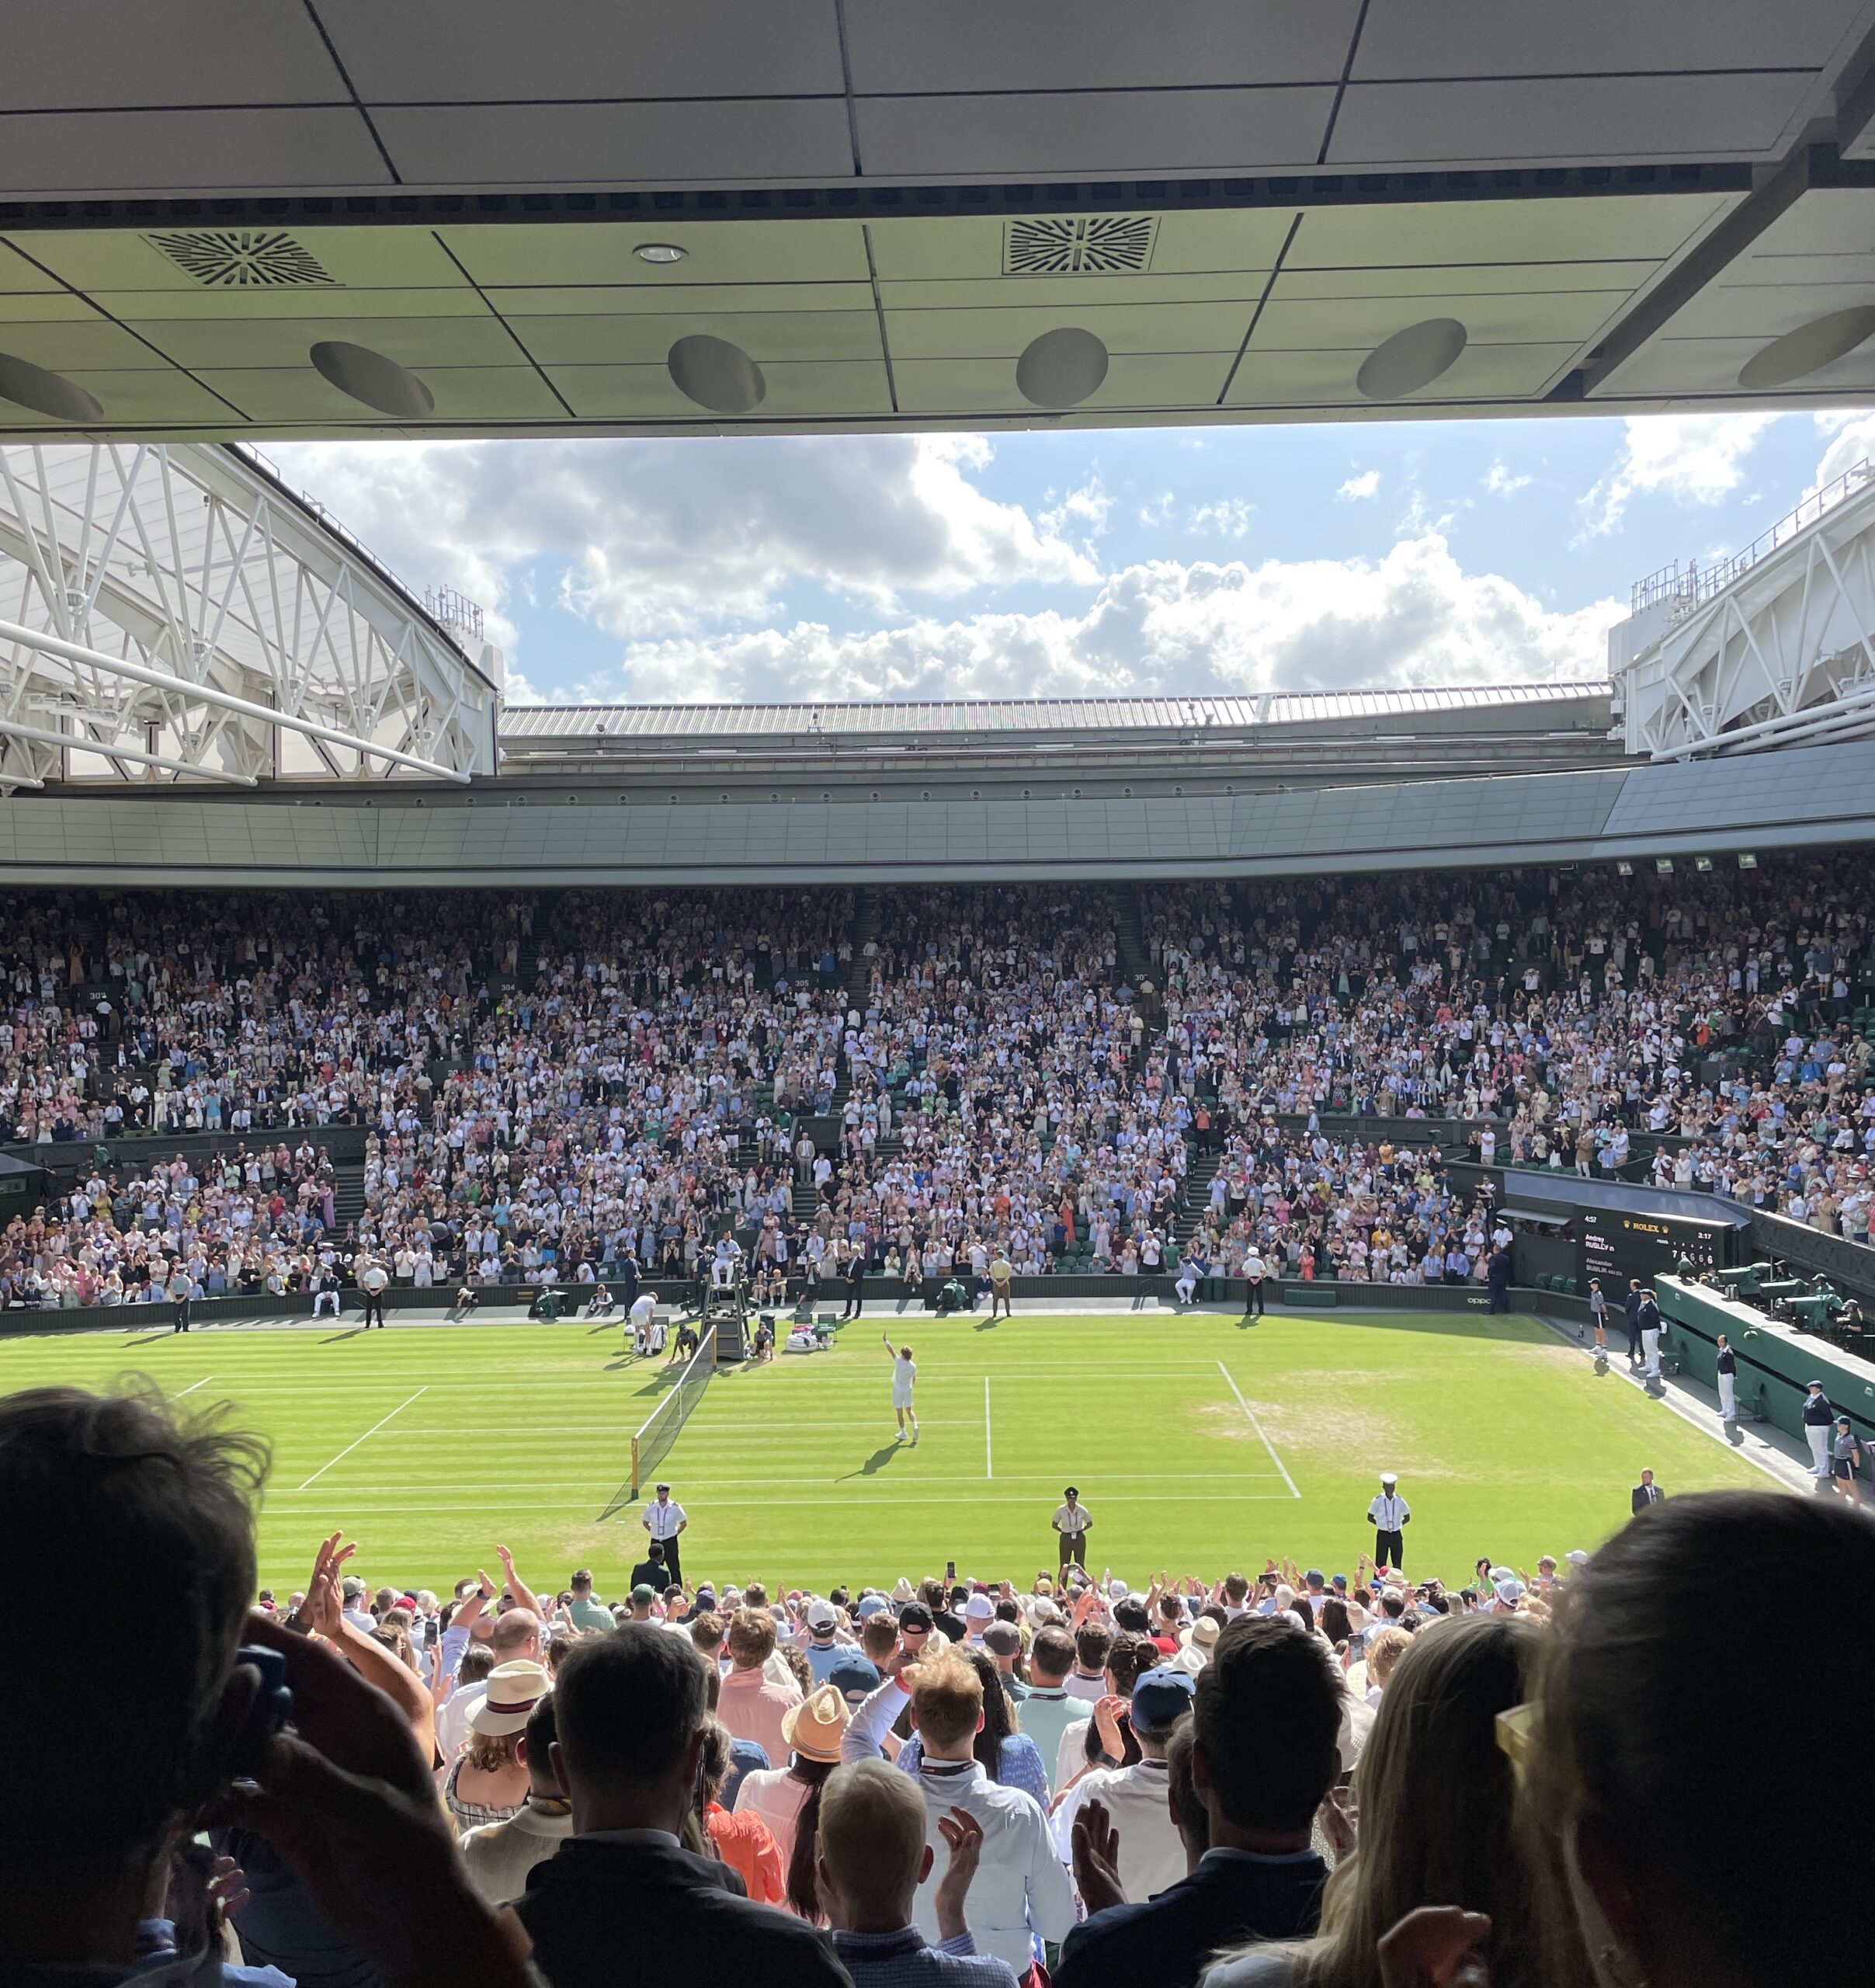 “Strawberries in Pimm’s”: Fourth Round at Wimbledon